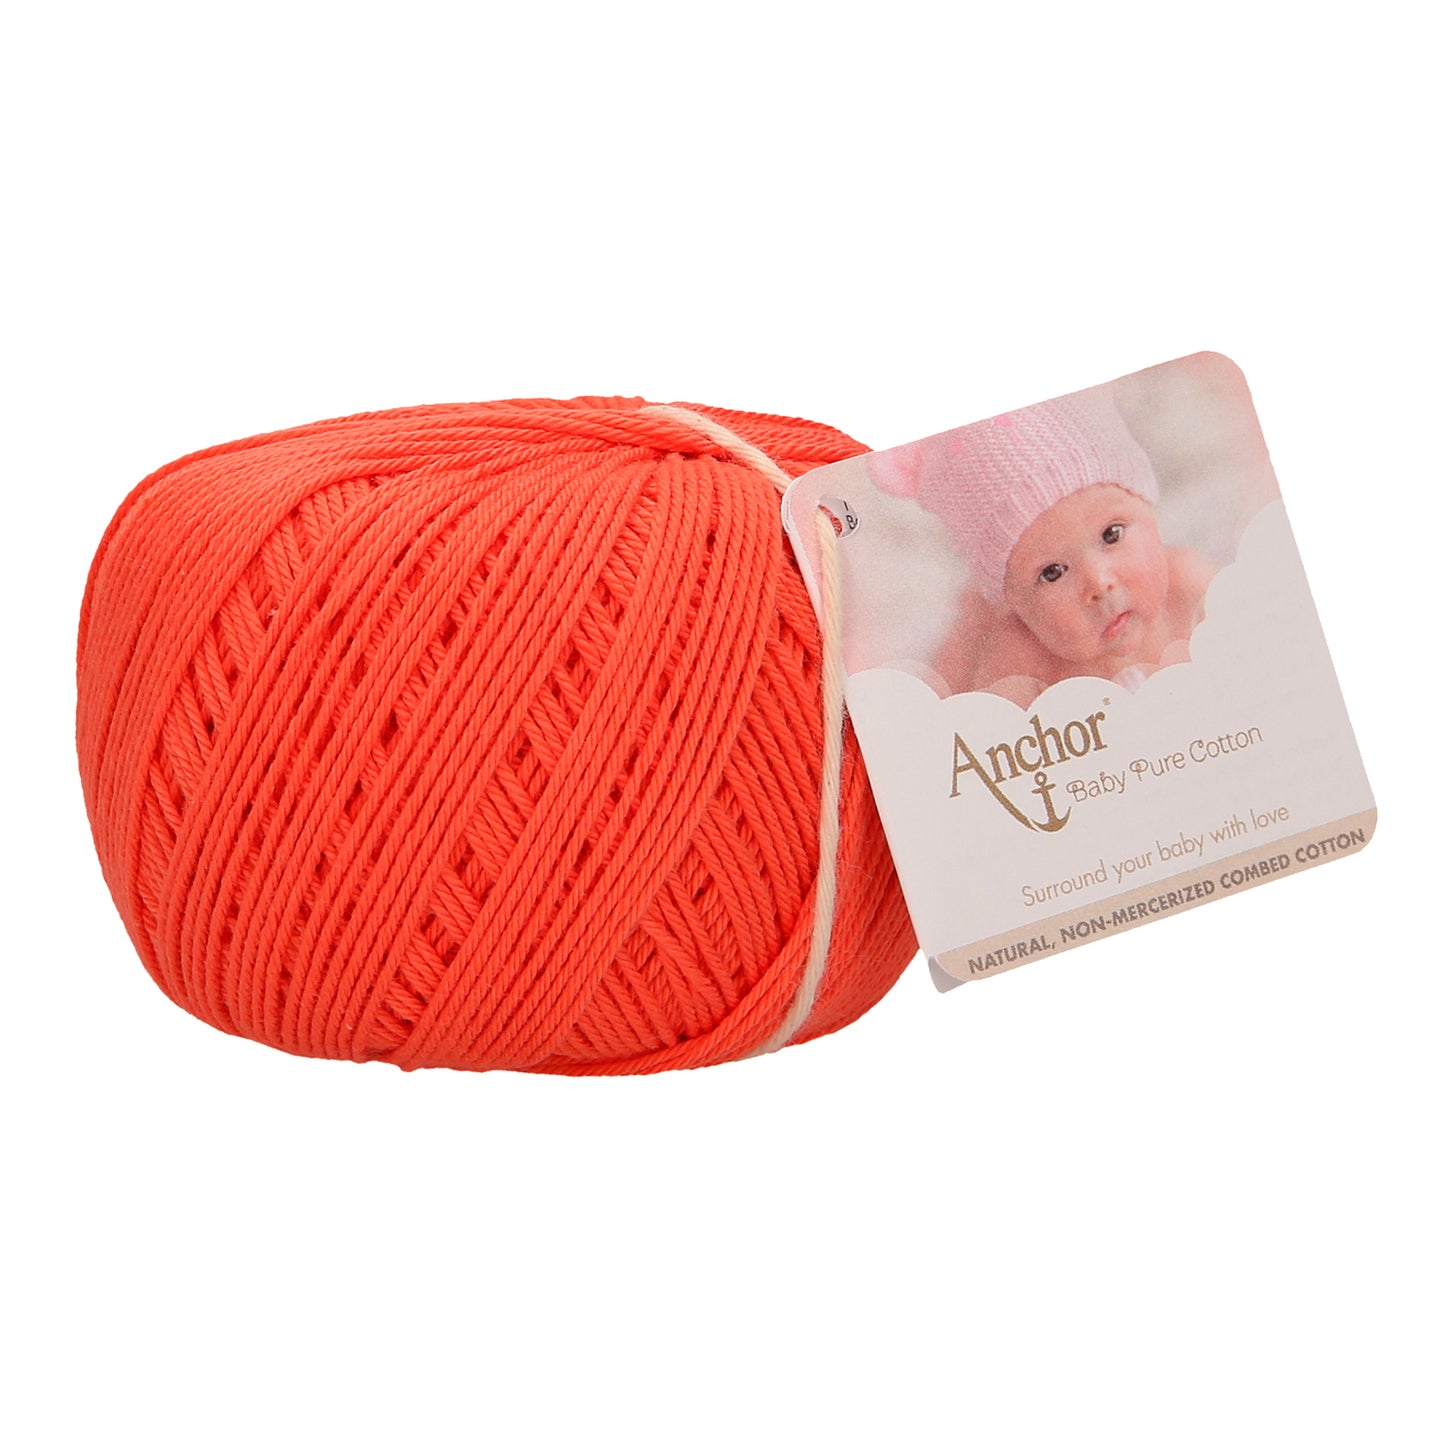 Anchor Baby Pure Cotton 4ply Yarn orange 0180